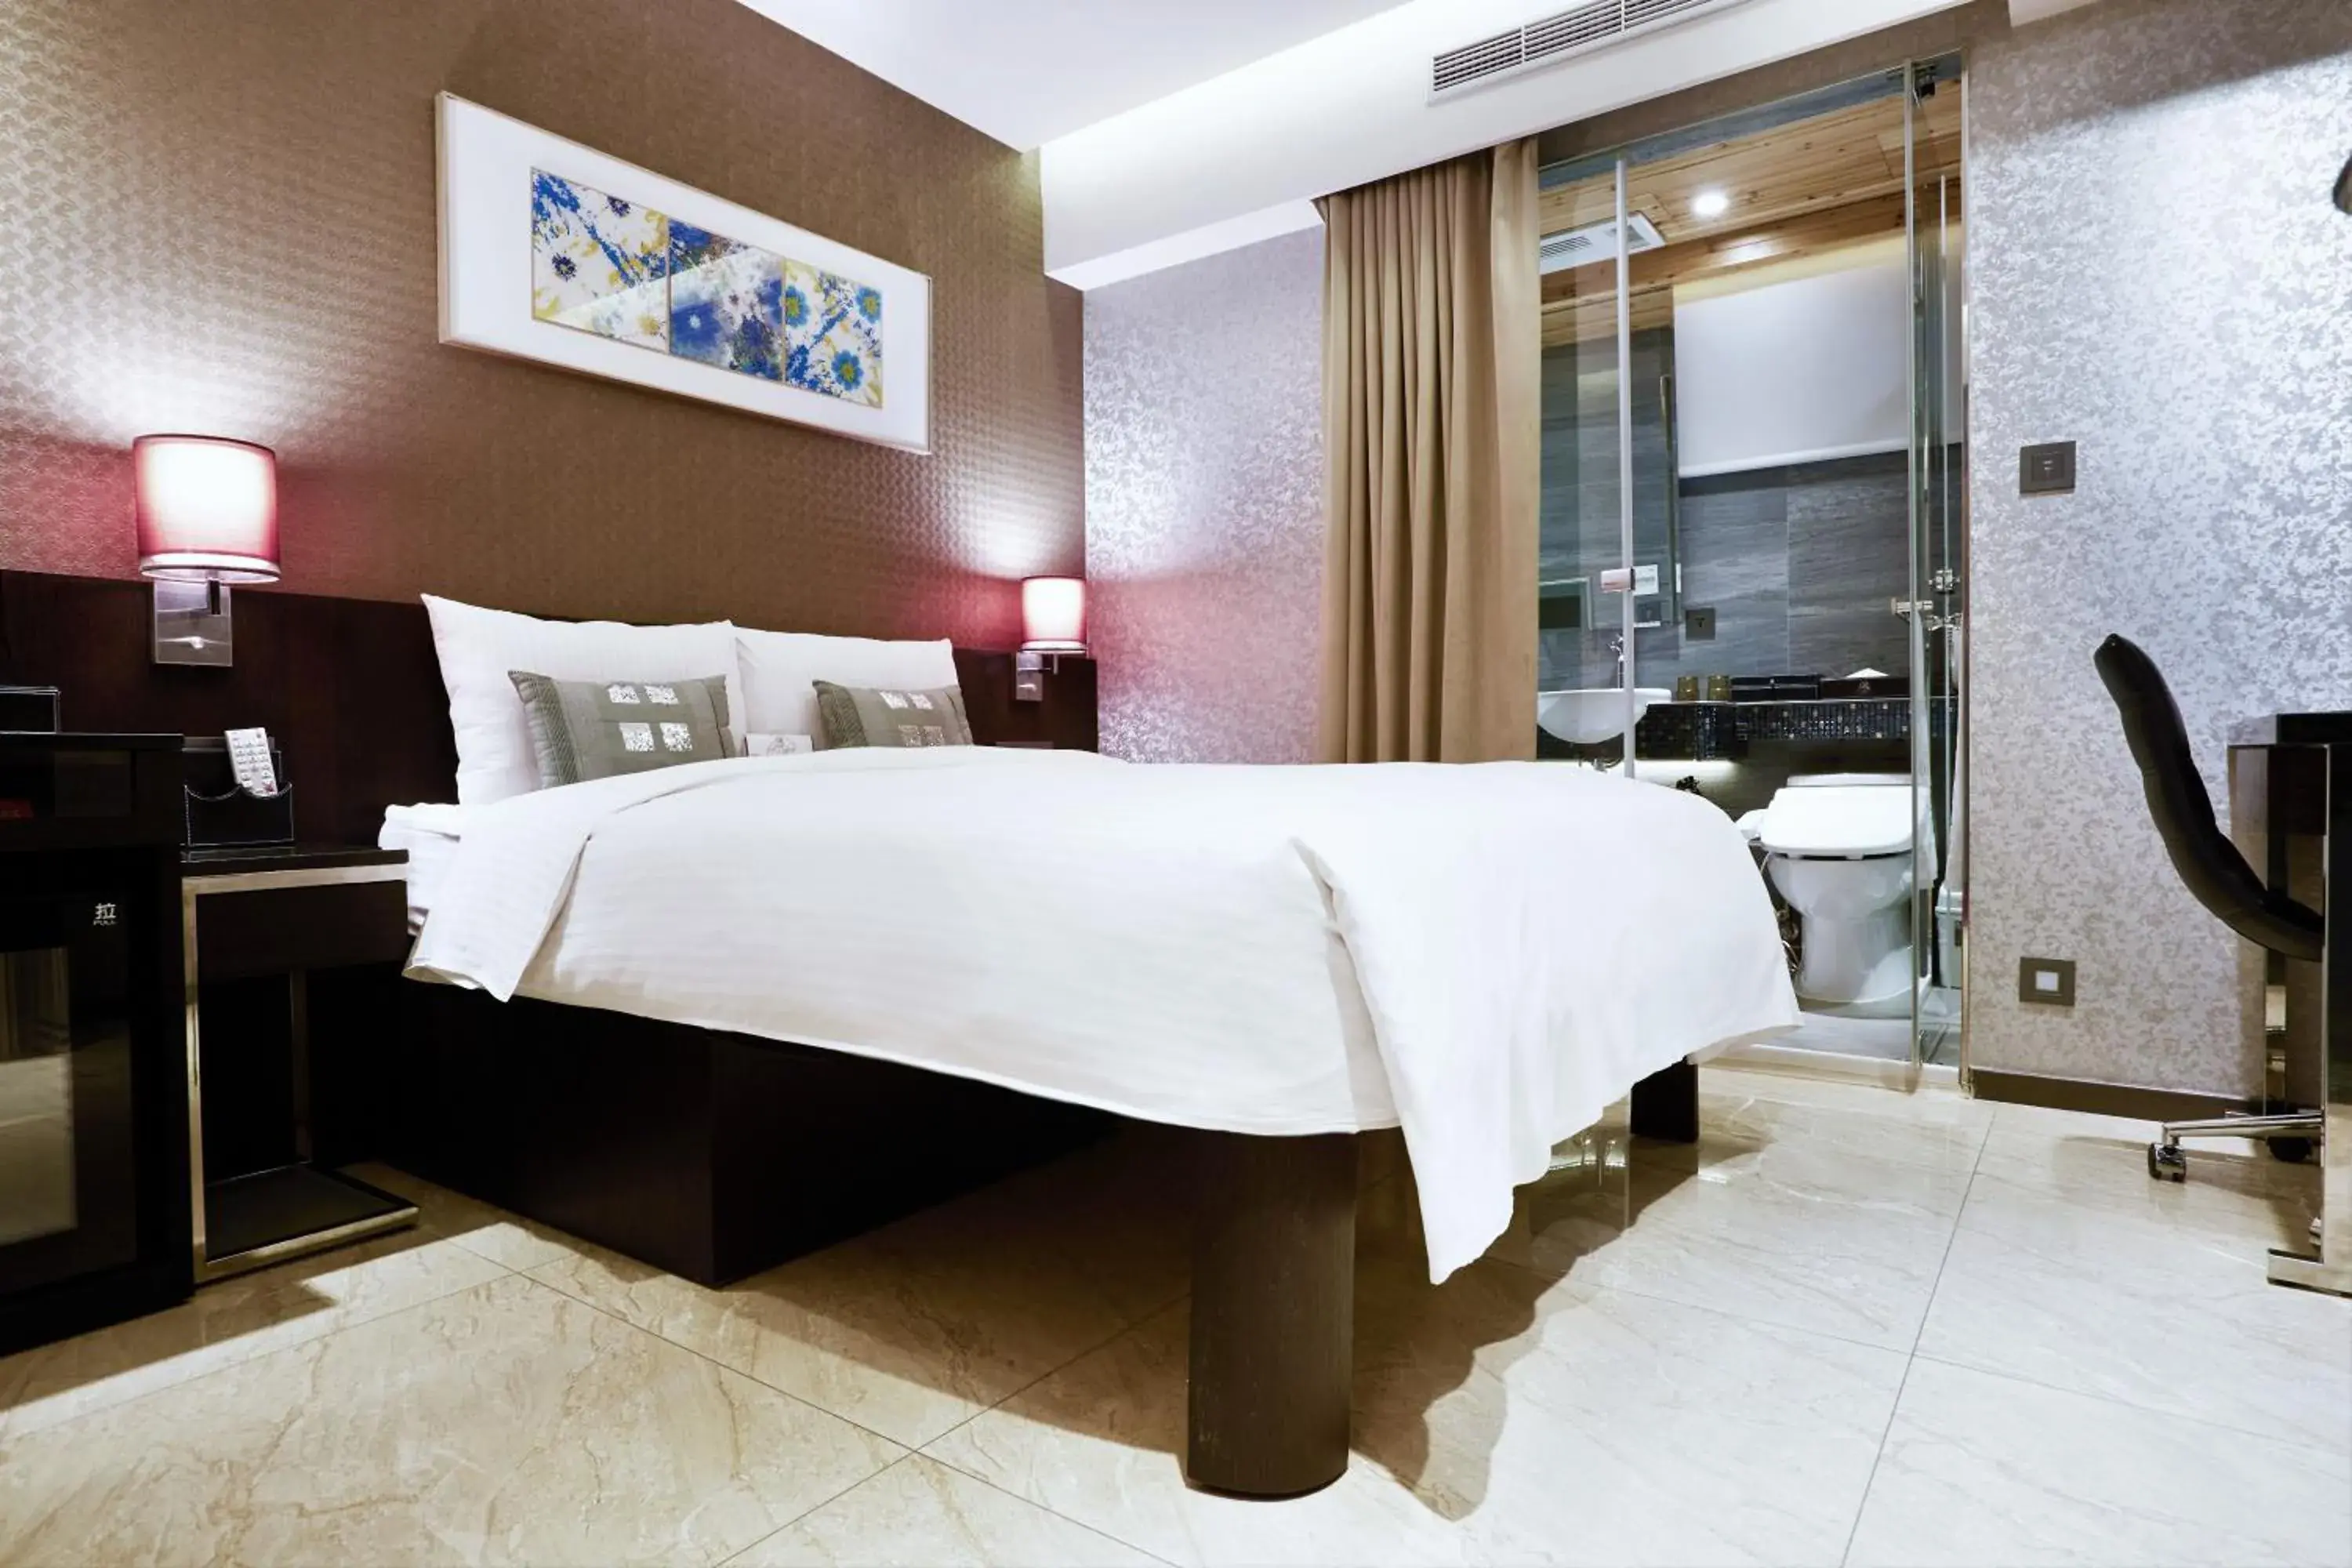 Bedroom, Room Photo in Beauty Hotels Taipei - Hotel Bfun